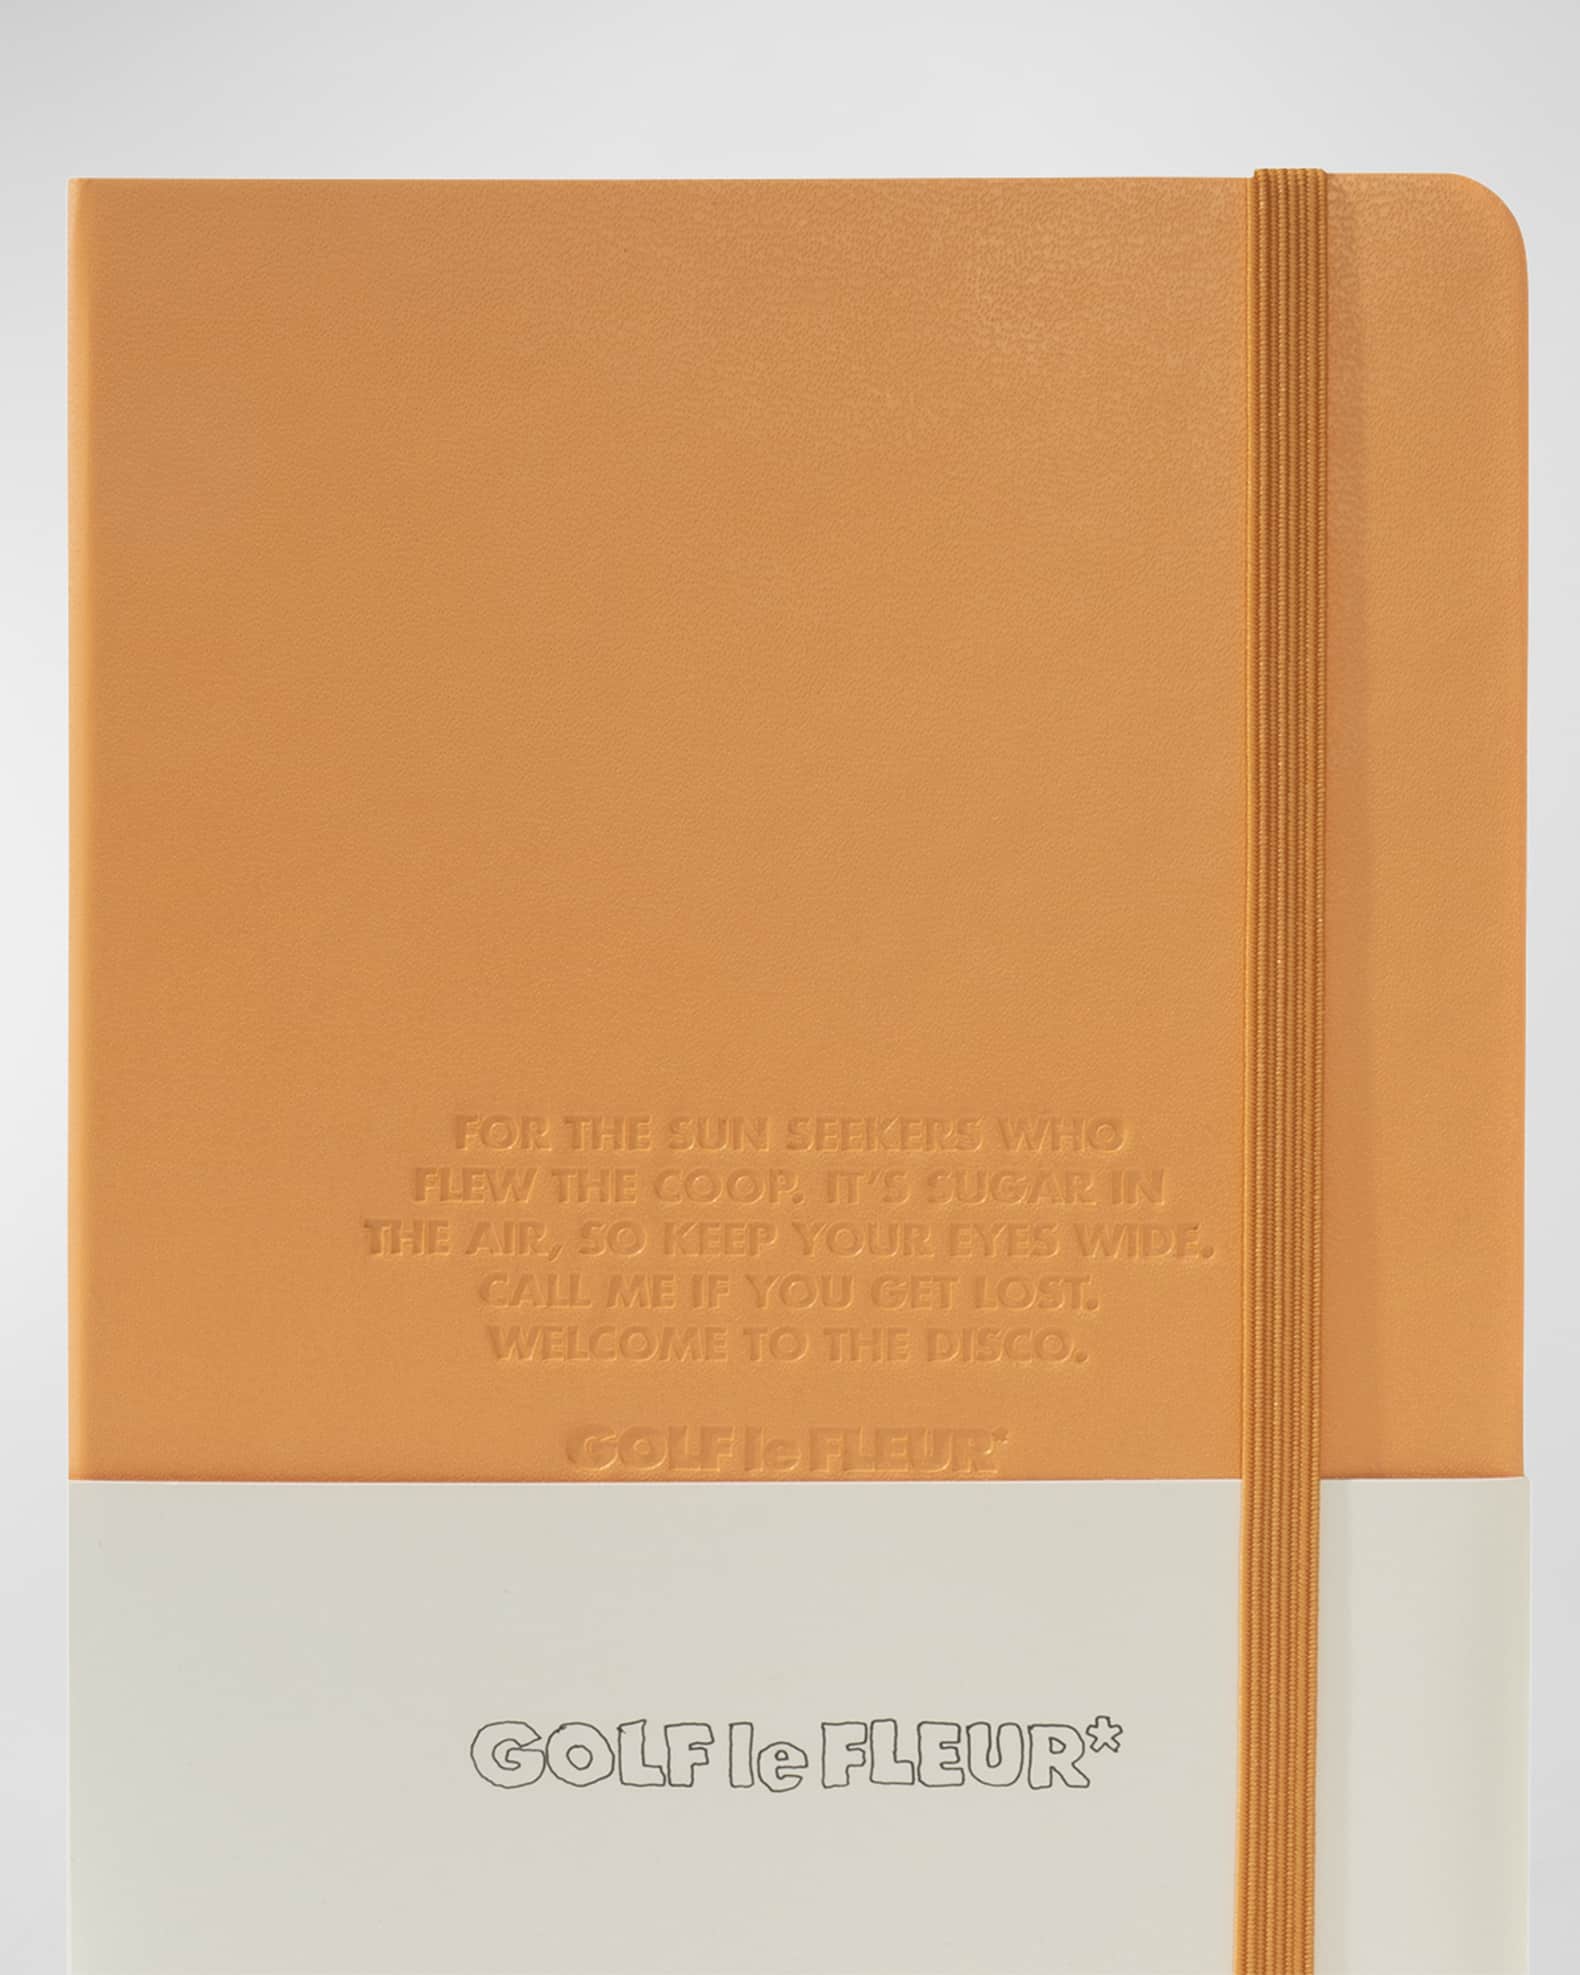 Moleskine Notebook, Saint Laurent